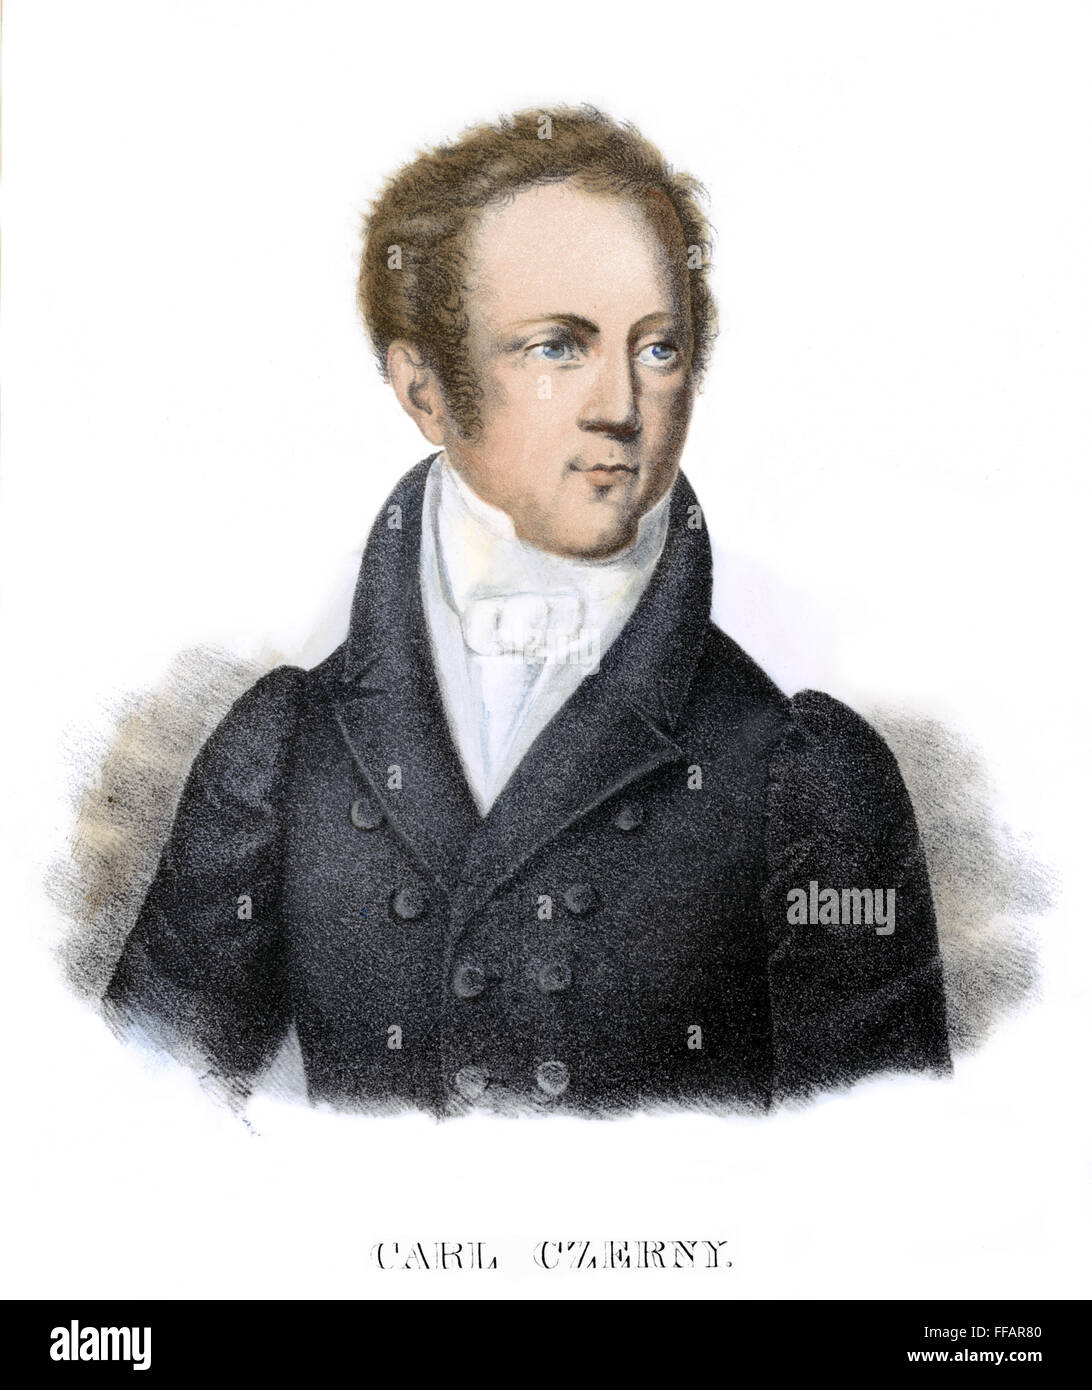 KARL CZERNY (1791-1857). /nAustrian Pianist und Komponist. Lithographie, 19. Jahrhundert. Stockfoto